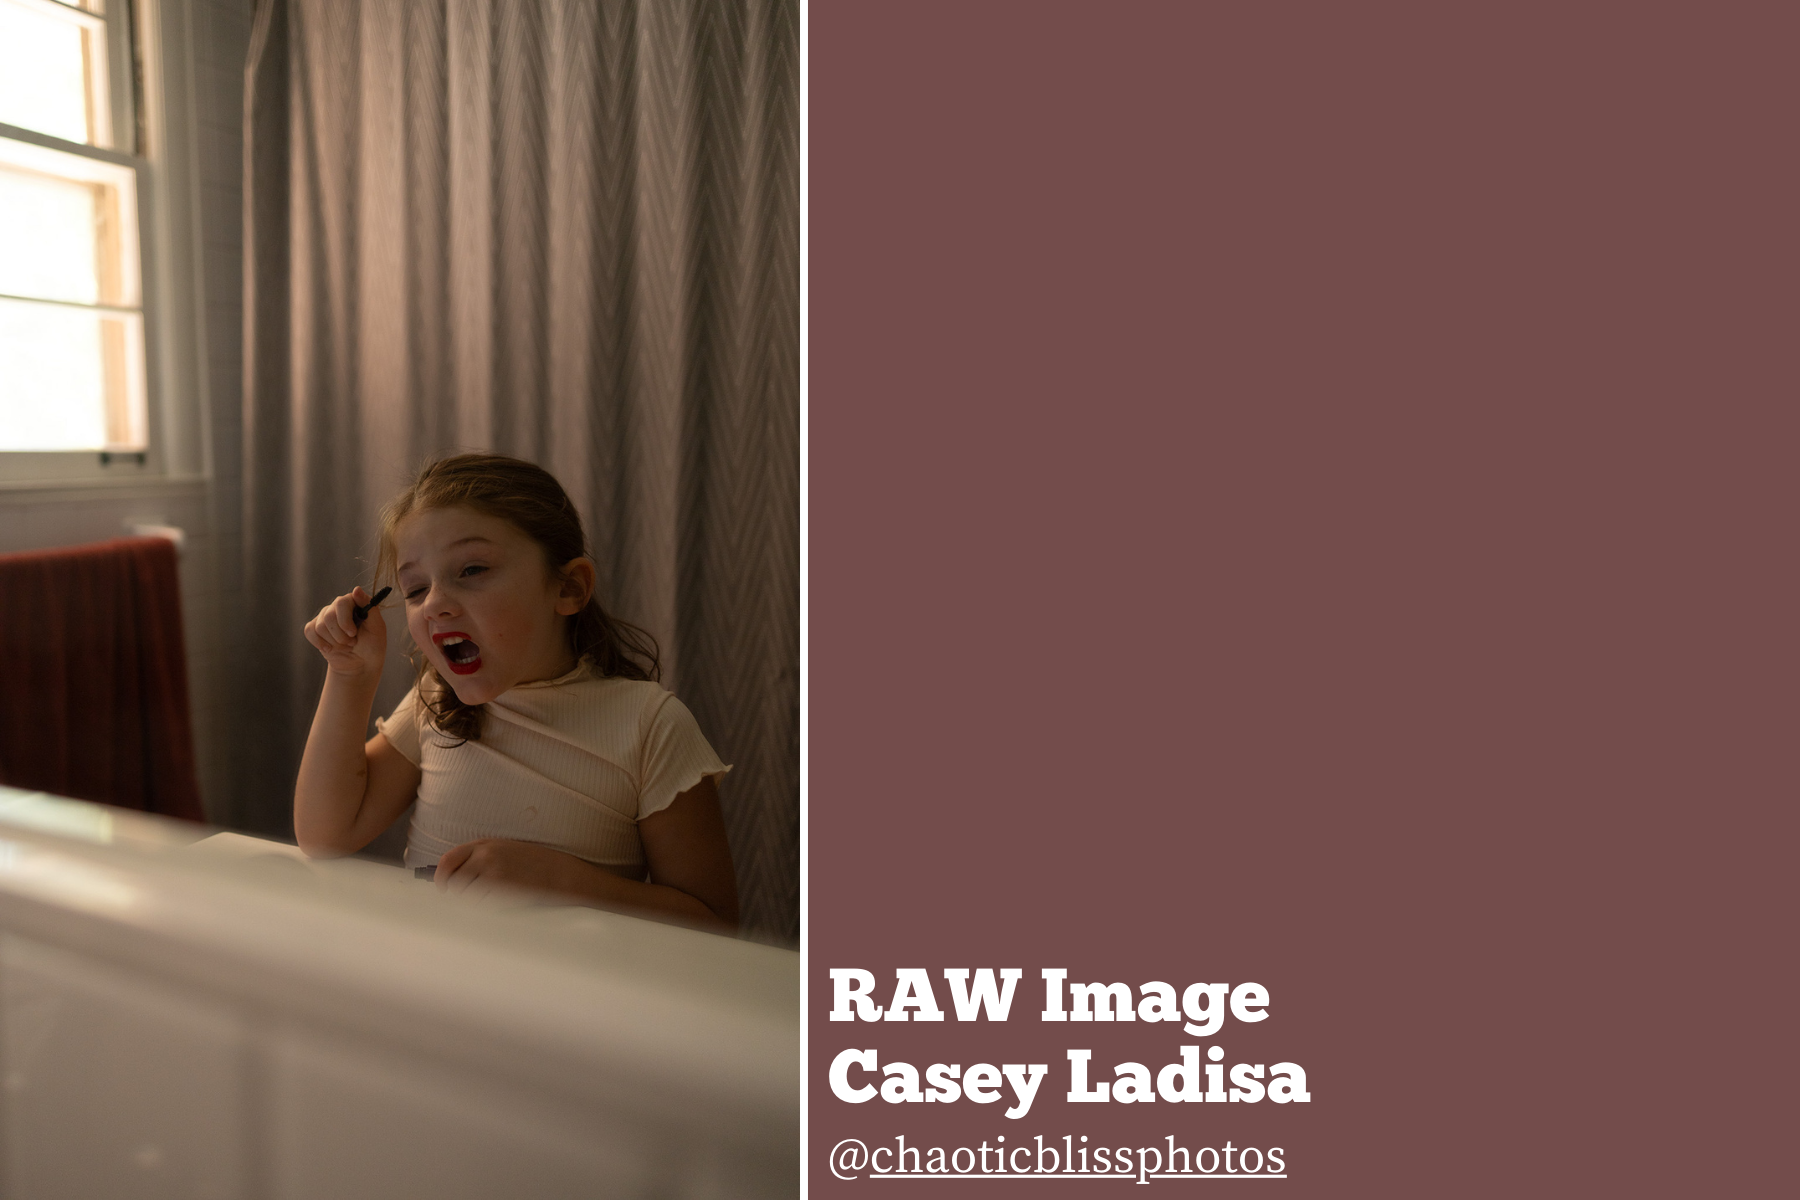 Raw Image: Casey Ladisa